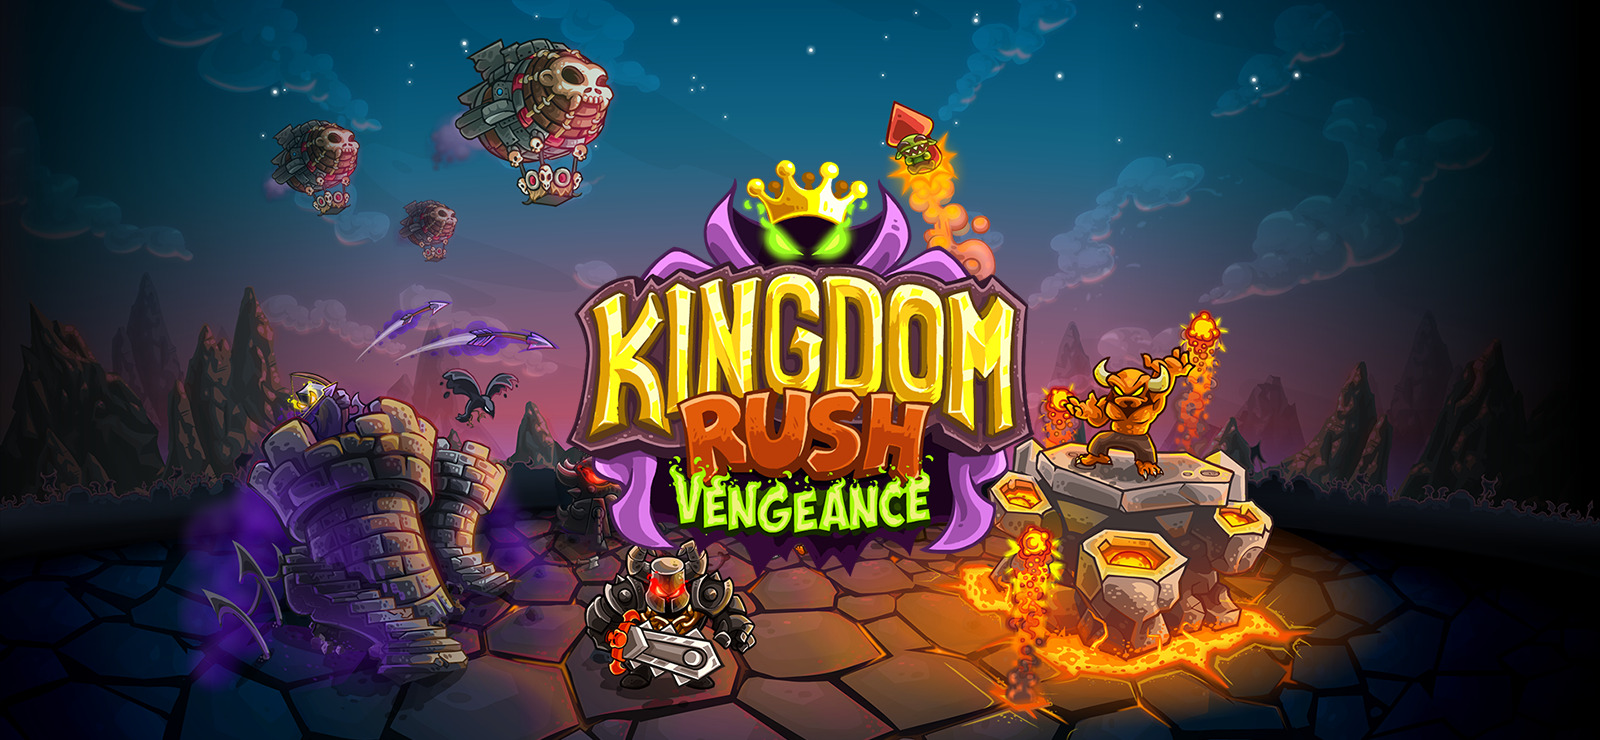 Kingdom Rush Vengeance for apple download free